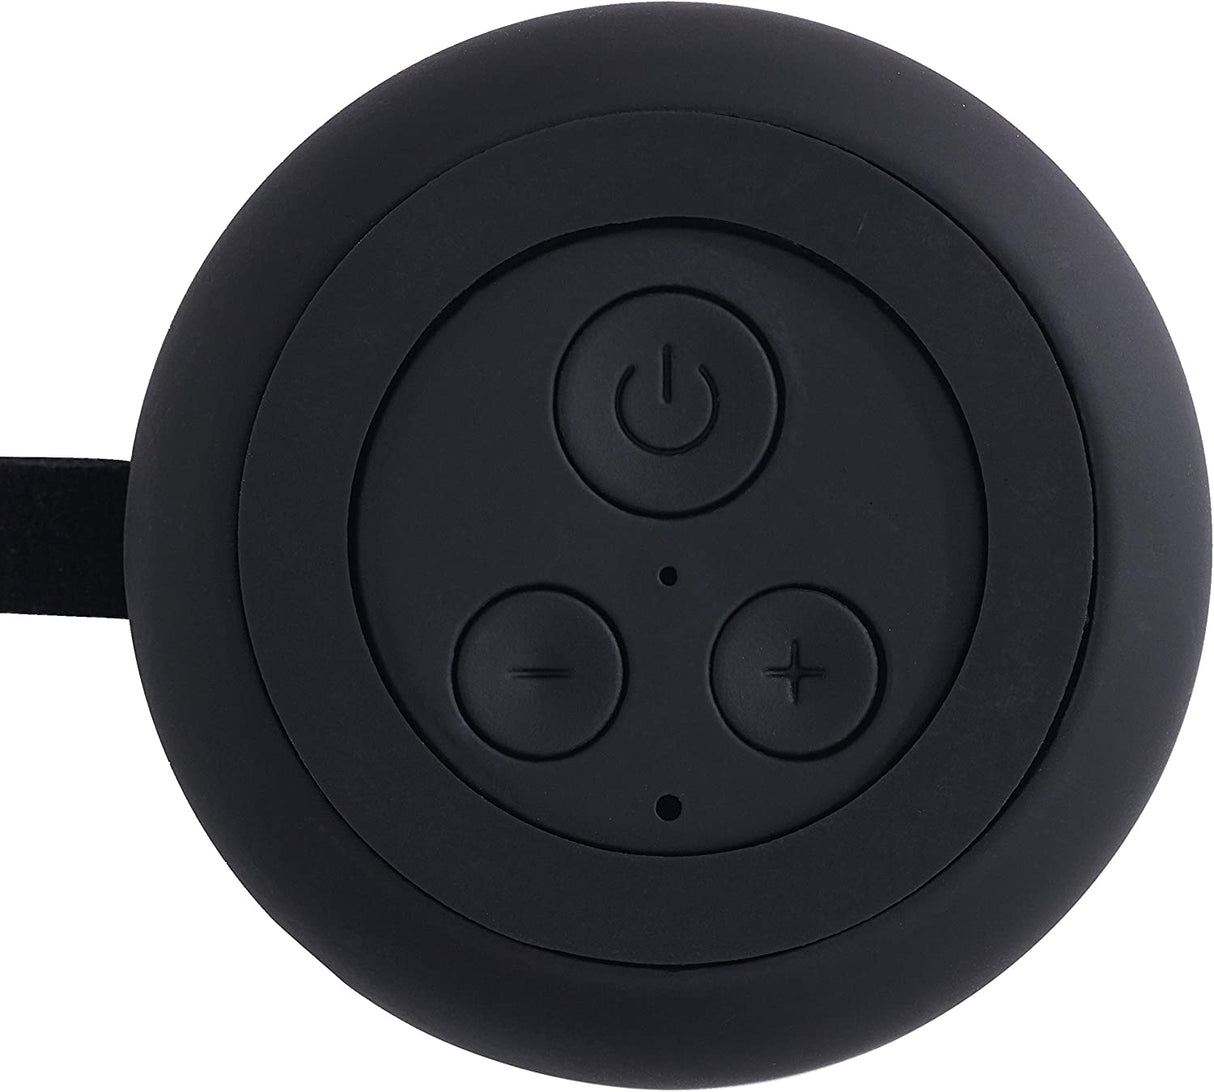 Verbatim Wireless Mini BluetoothSpeaker - Black